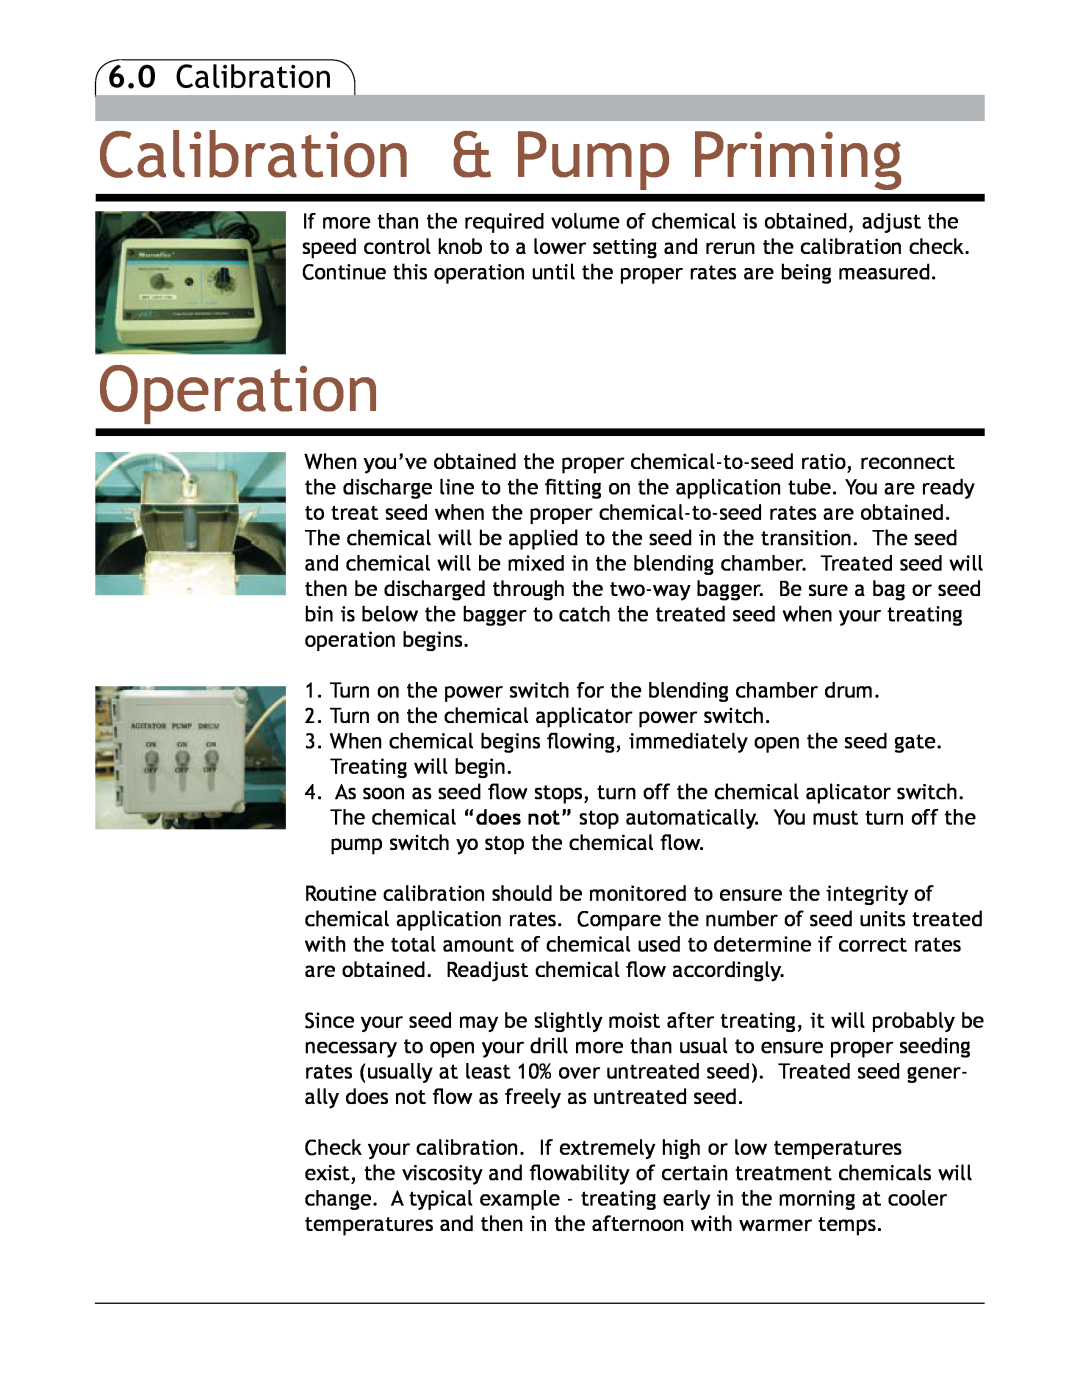 Bayer HealthCare CF-80 manual Operation, Calibration & Pump Priming 